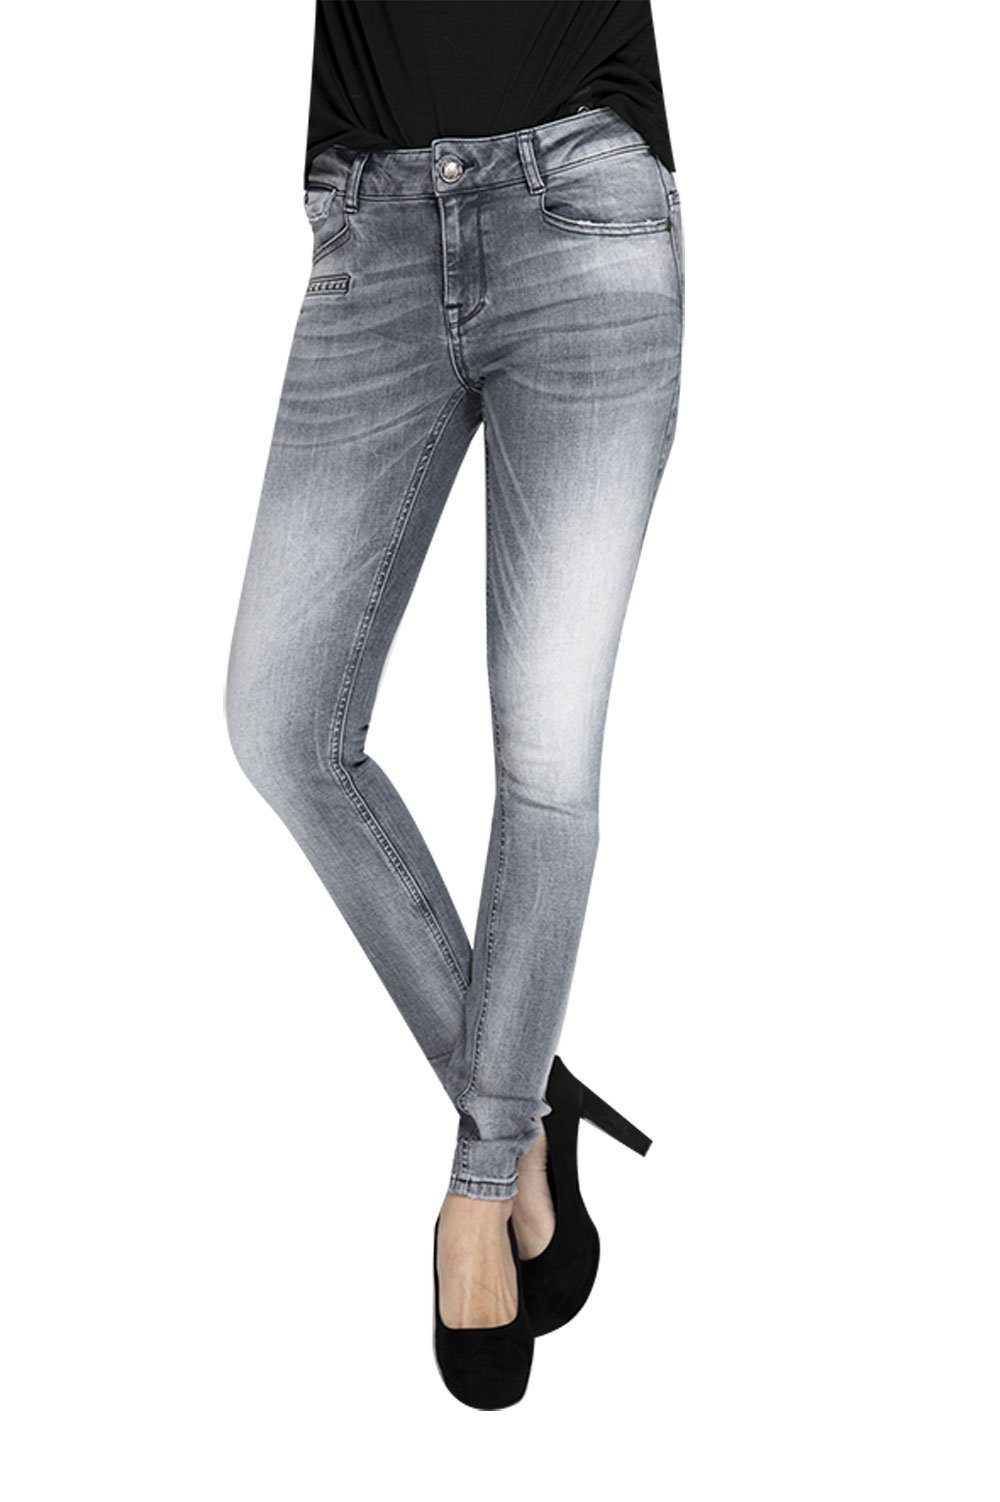 NGHTBRD Denim Jeanshose in Grau Damen Bekleidung Jeans Röhrenjeans 